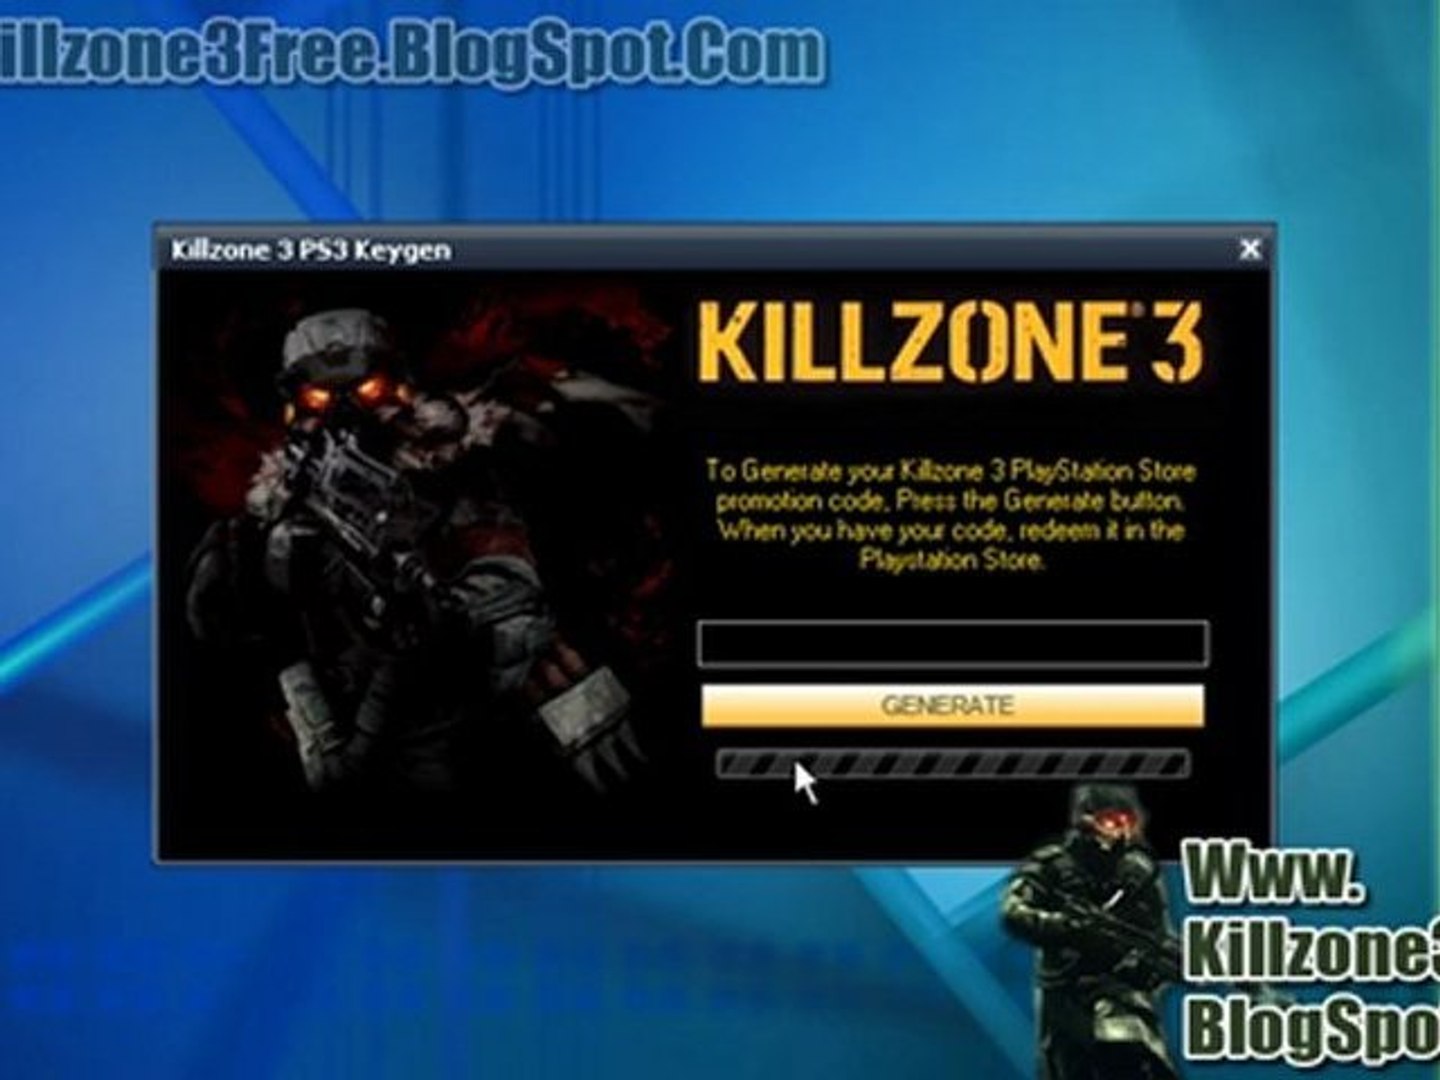 killzone 3 crack Download Free [Tutorial] - video Dailymotion